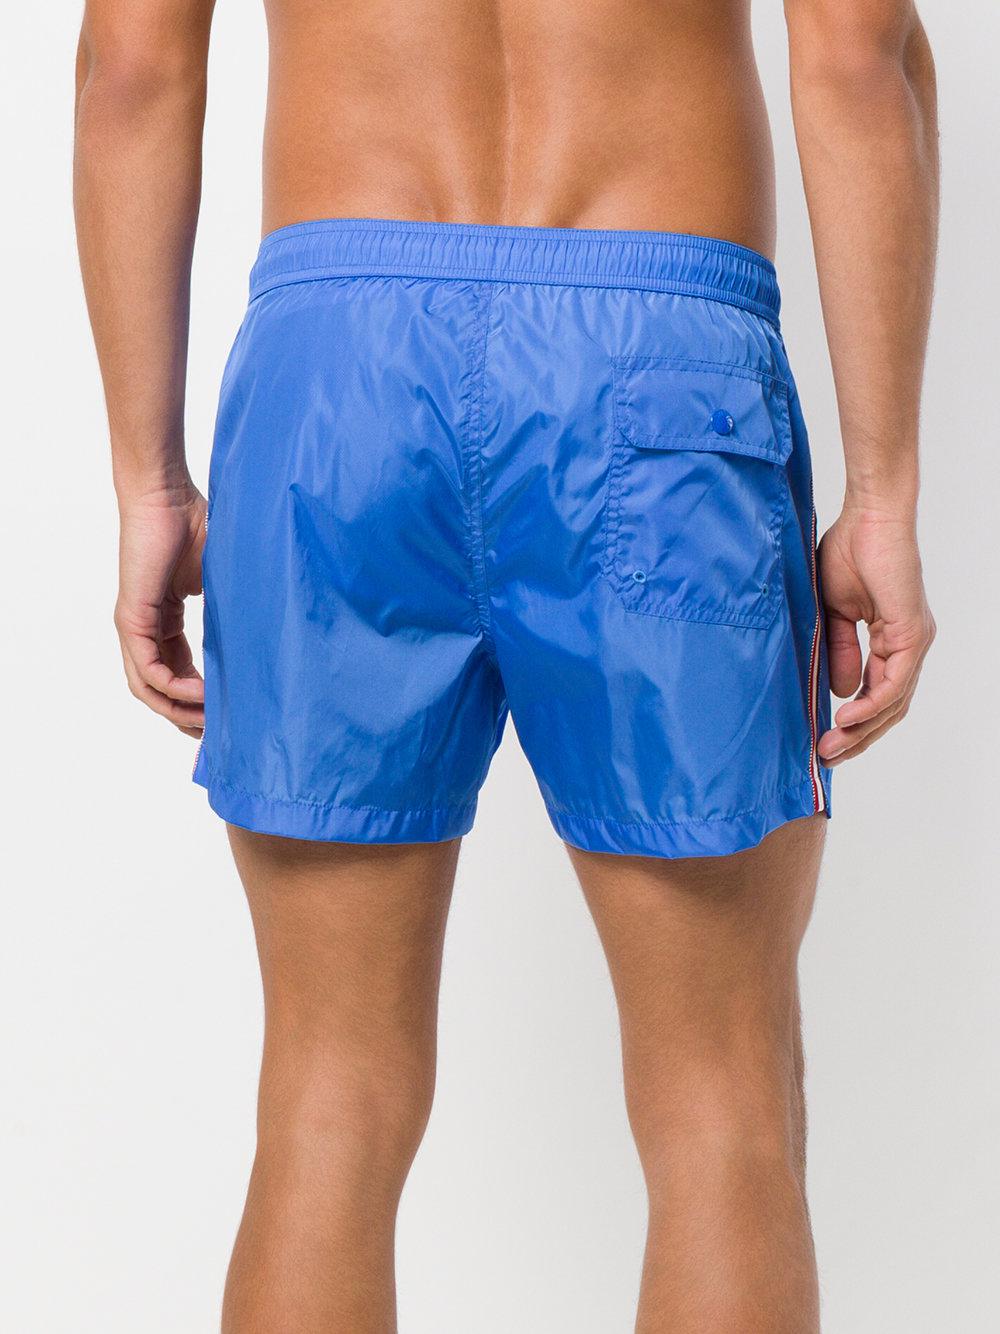 Moncler Synthetic Tri-stripe Trim Swim Shorts in Blue for Men - Lyst